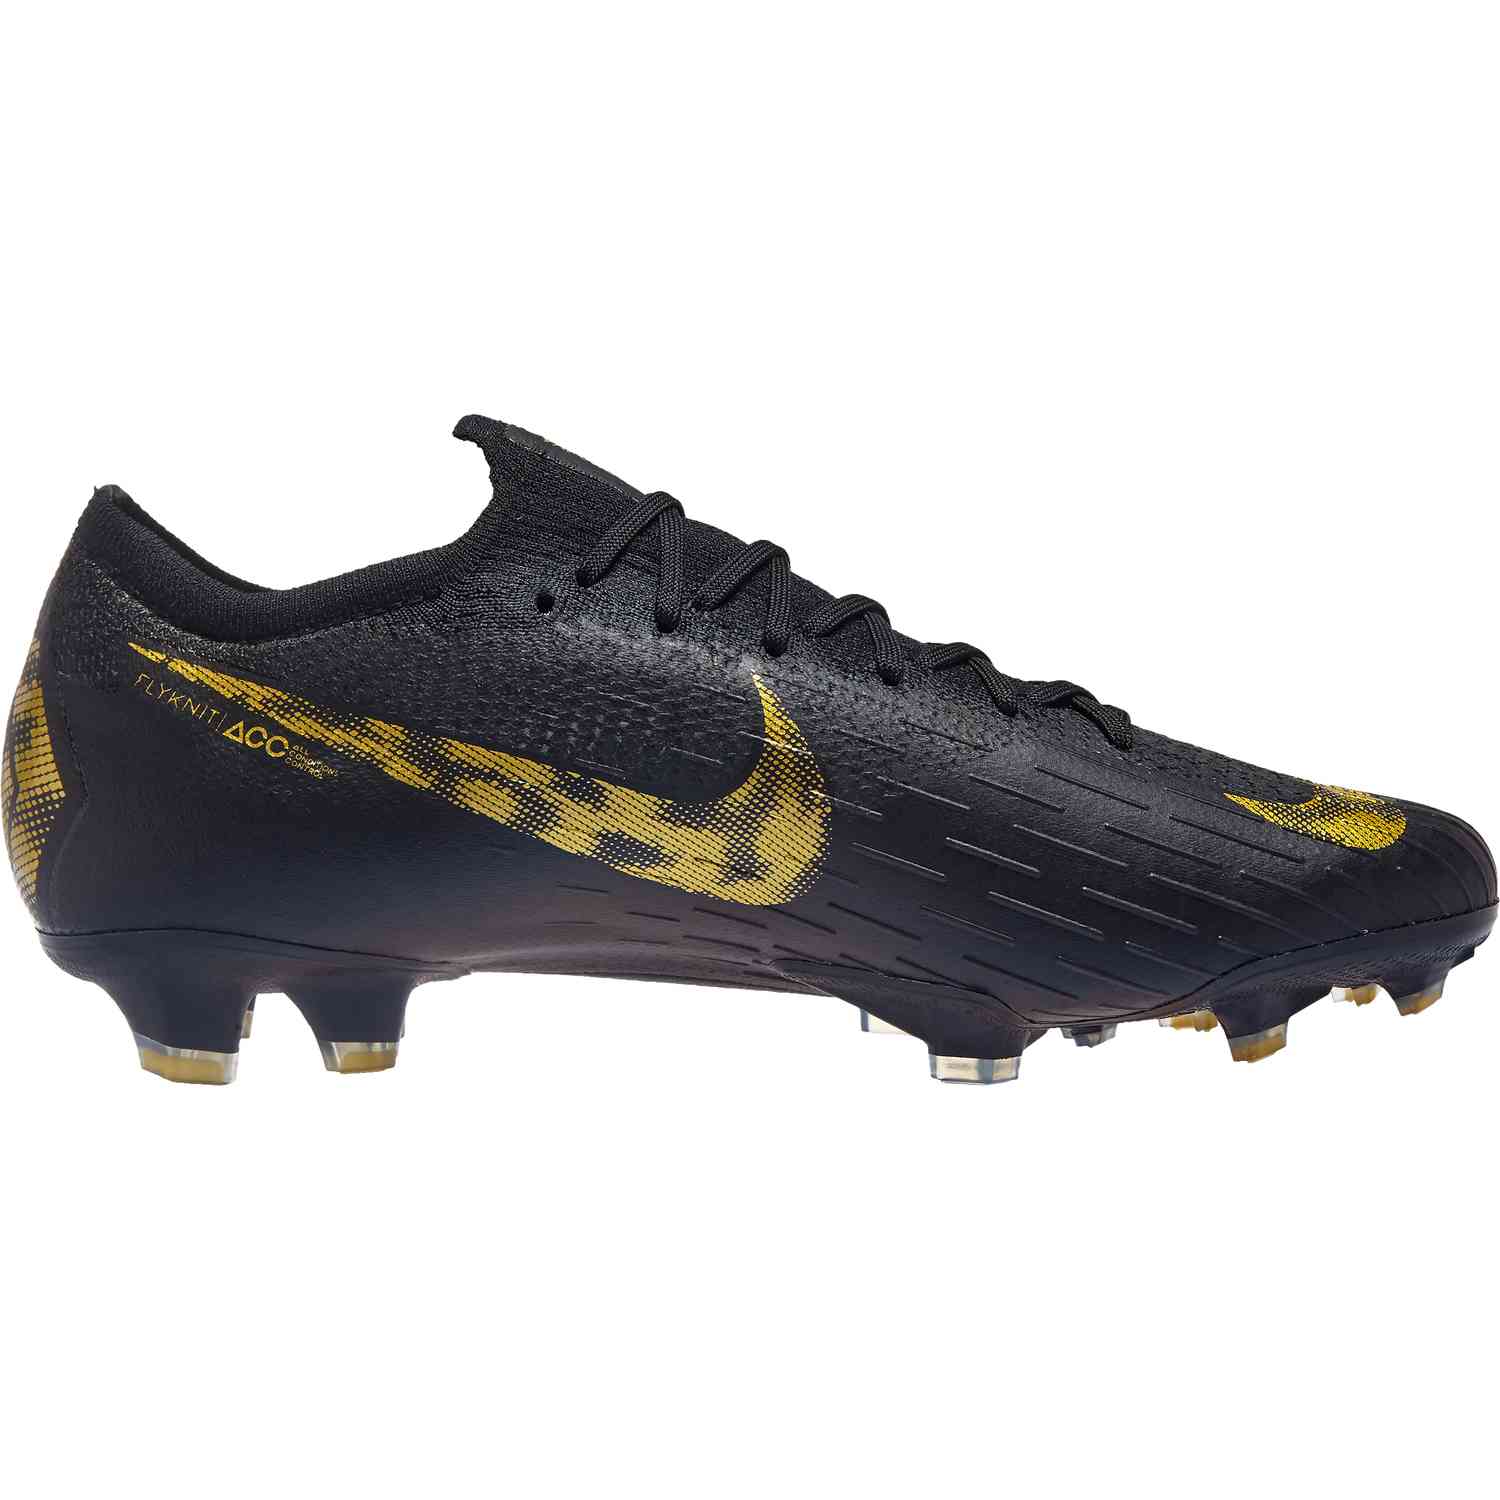 mercurial vapor xii elite fg football boots